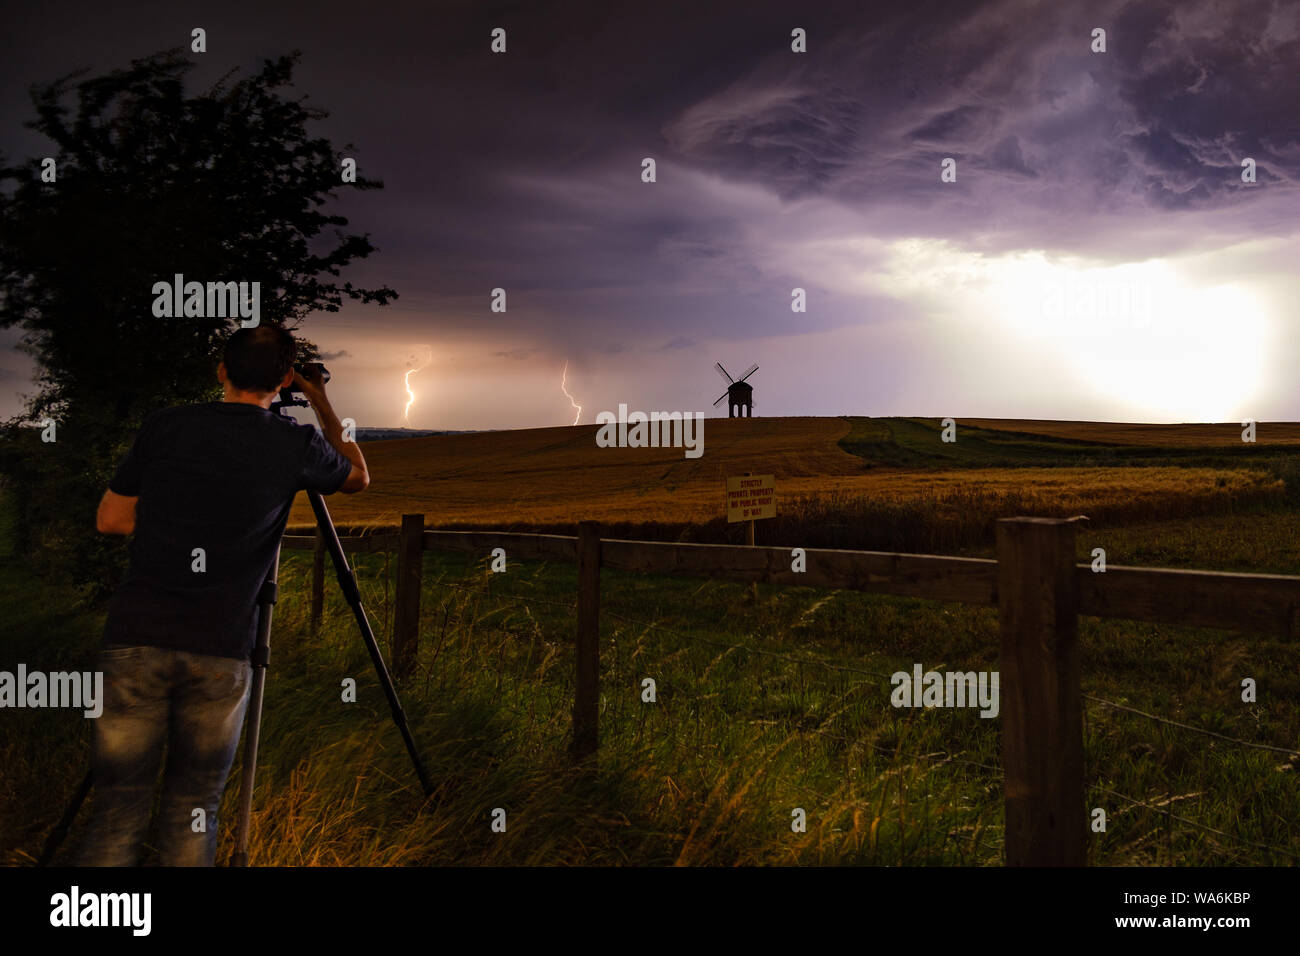 A photographer capturing a lightning storm over Chesterton Windmill, Warwickshire, UK Stock Photo